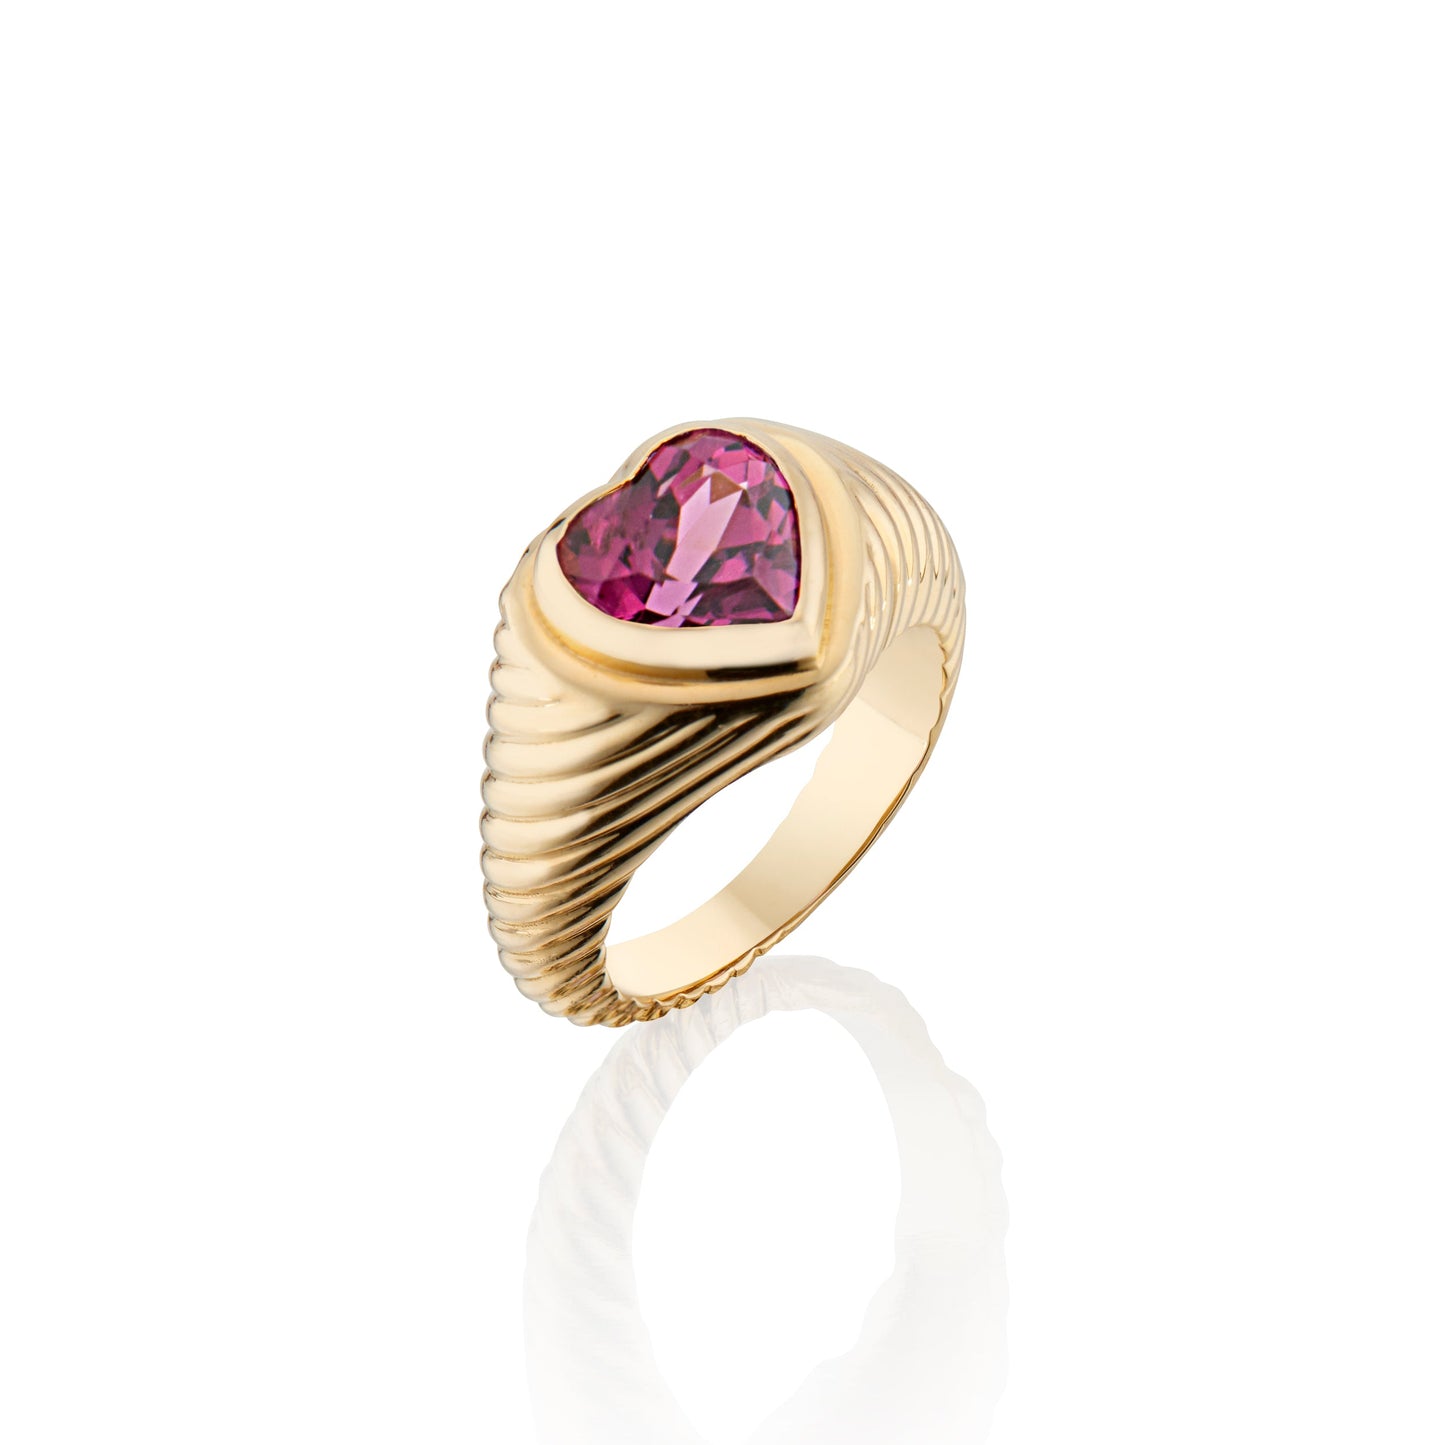 Eden Love Signet Pinky Ring with Pink Tourmaline Gemstone